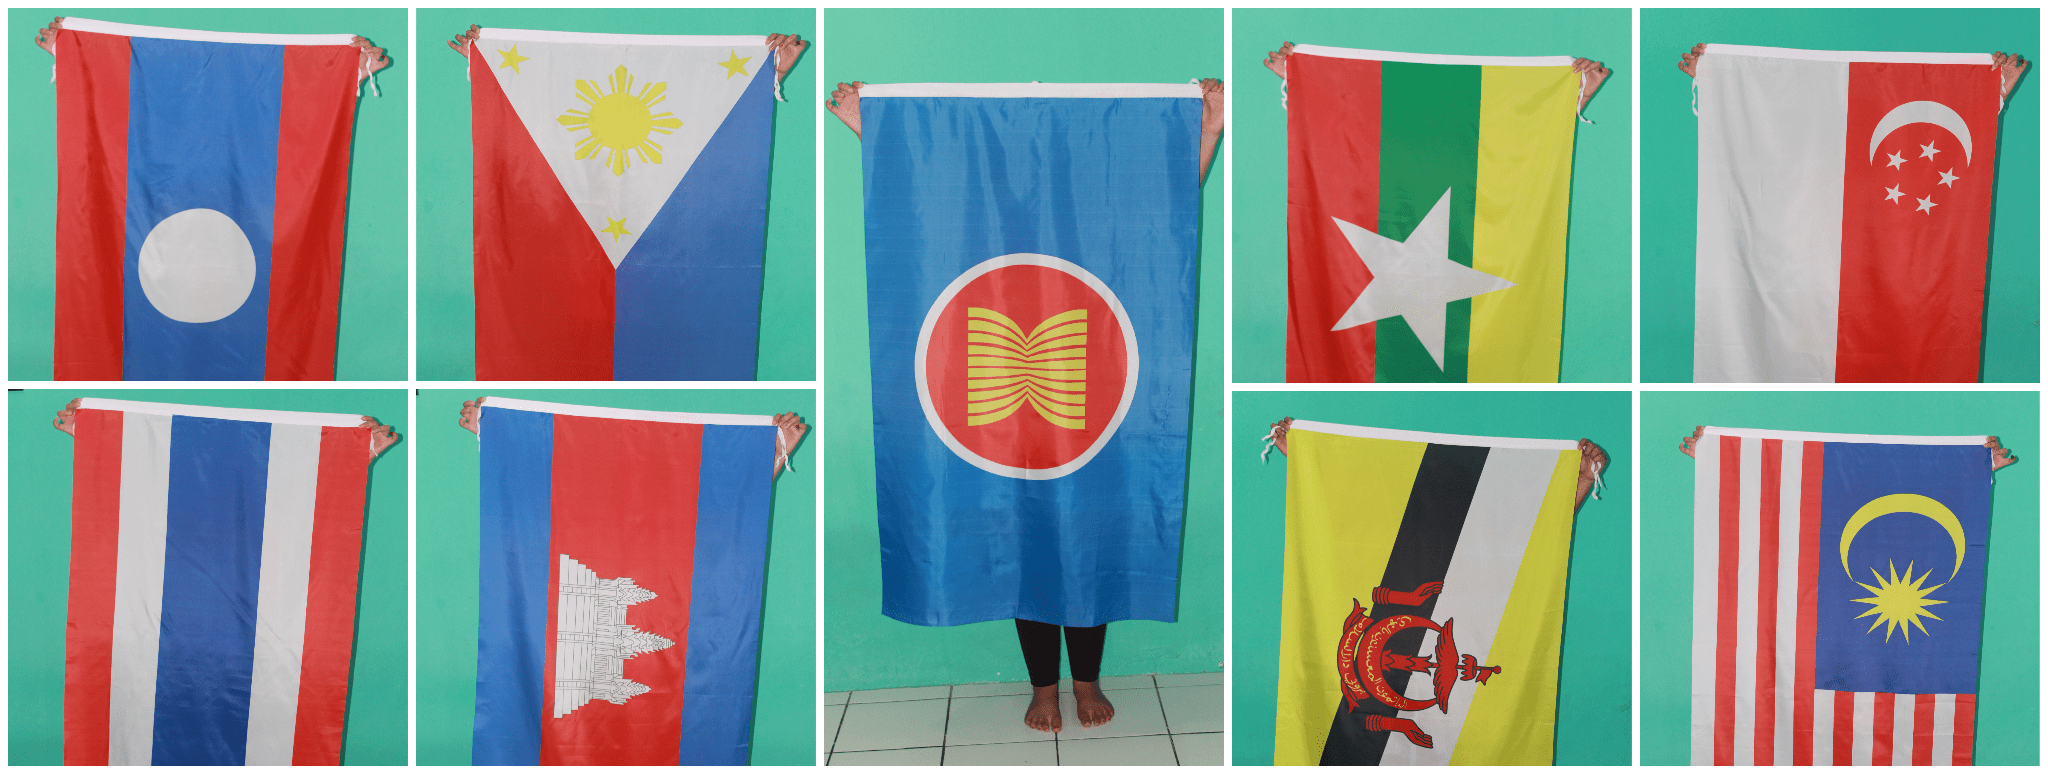 Bendera Negara Anggota Asean Ukuran X Cm Lazada Indonesia